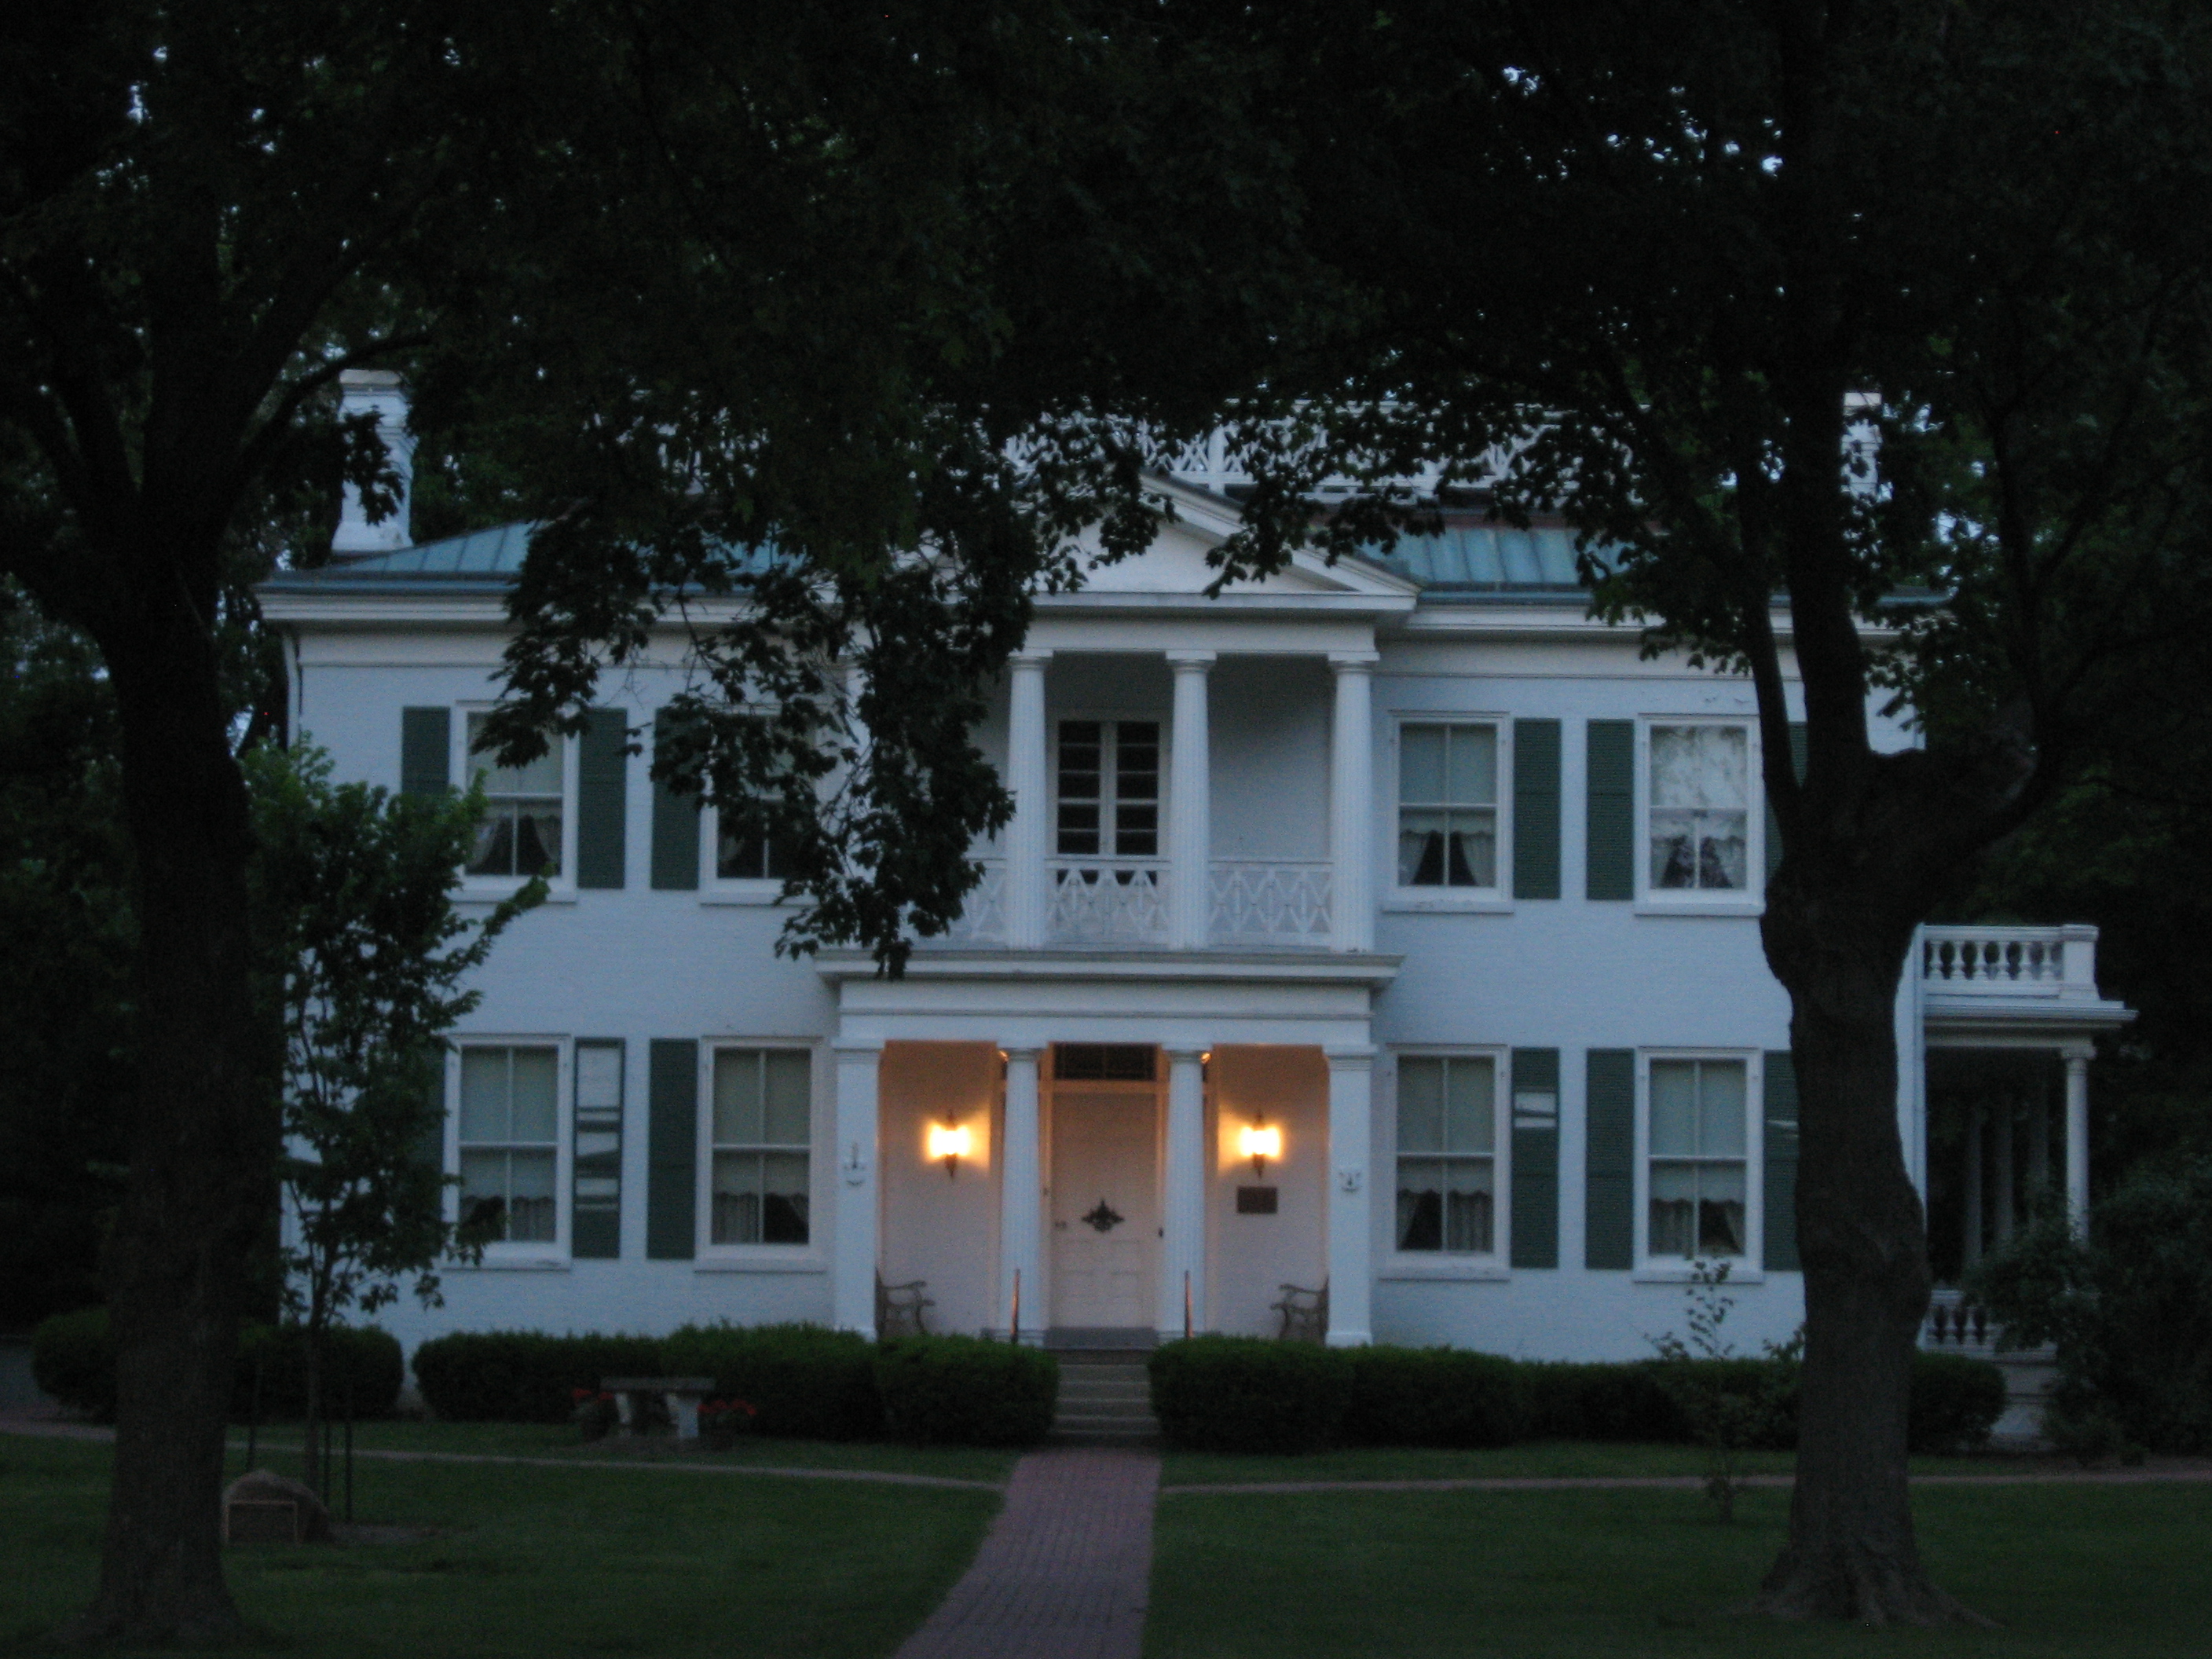 File:Henry S. Lane House at night.jpg - Wikimedia Commons